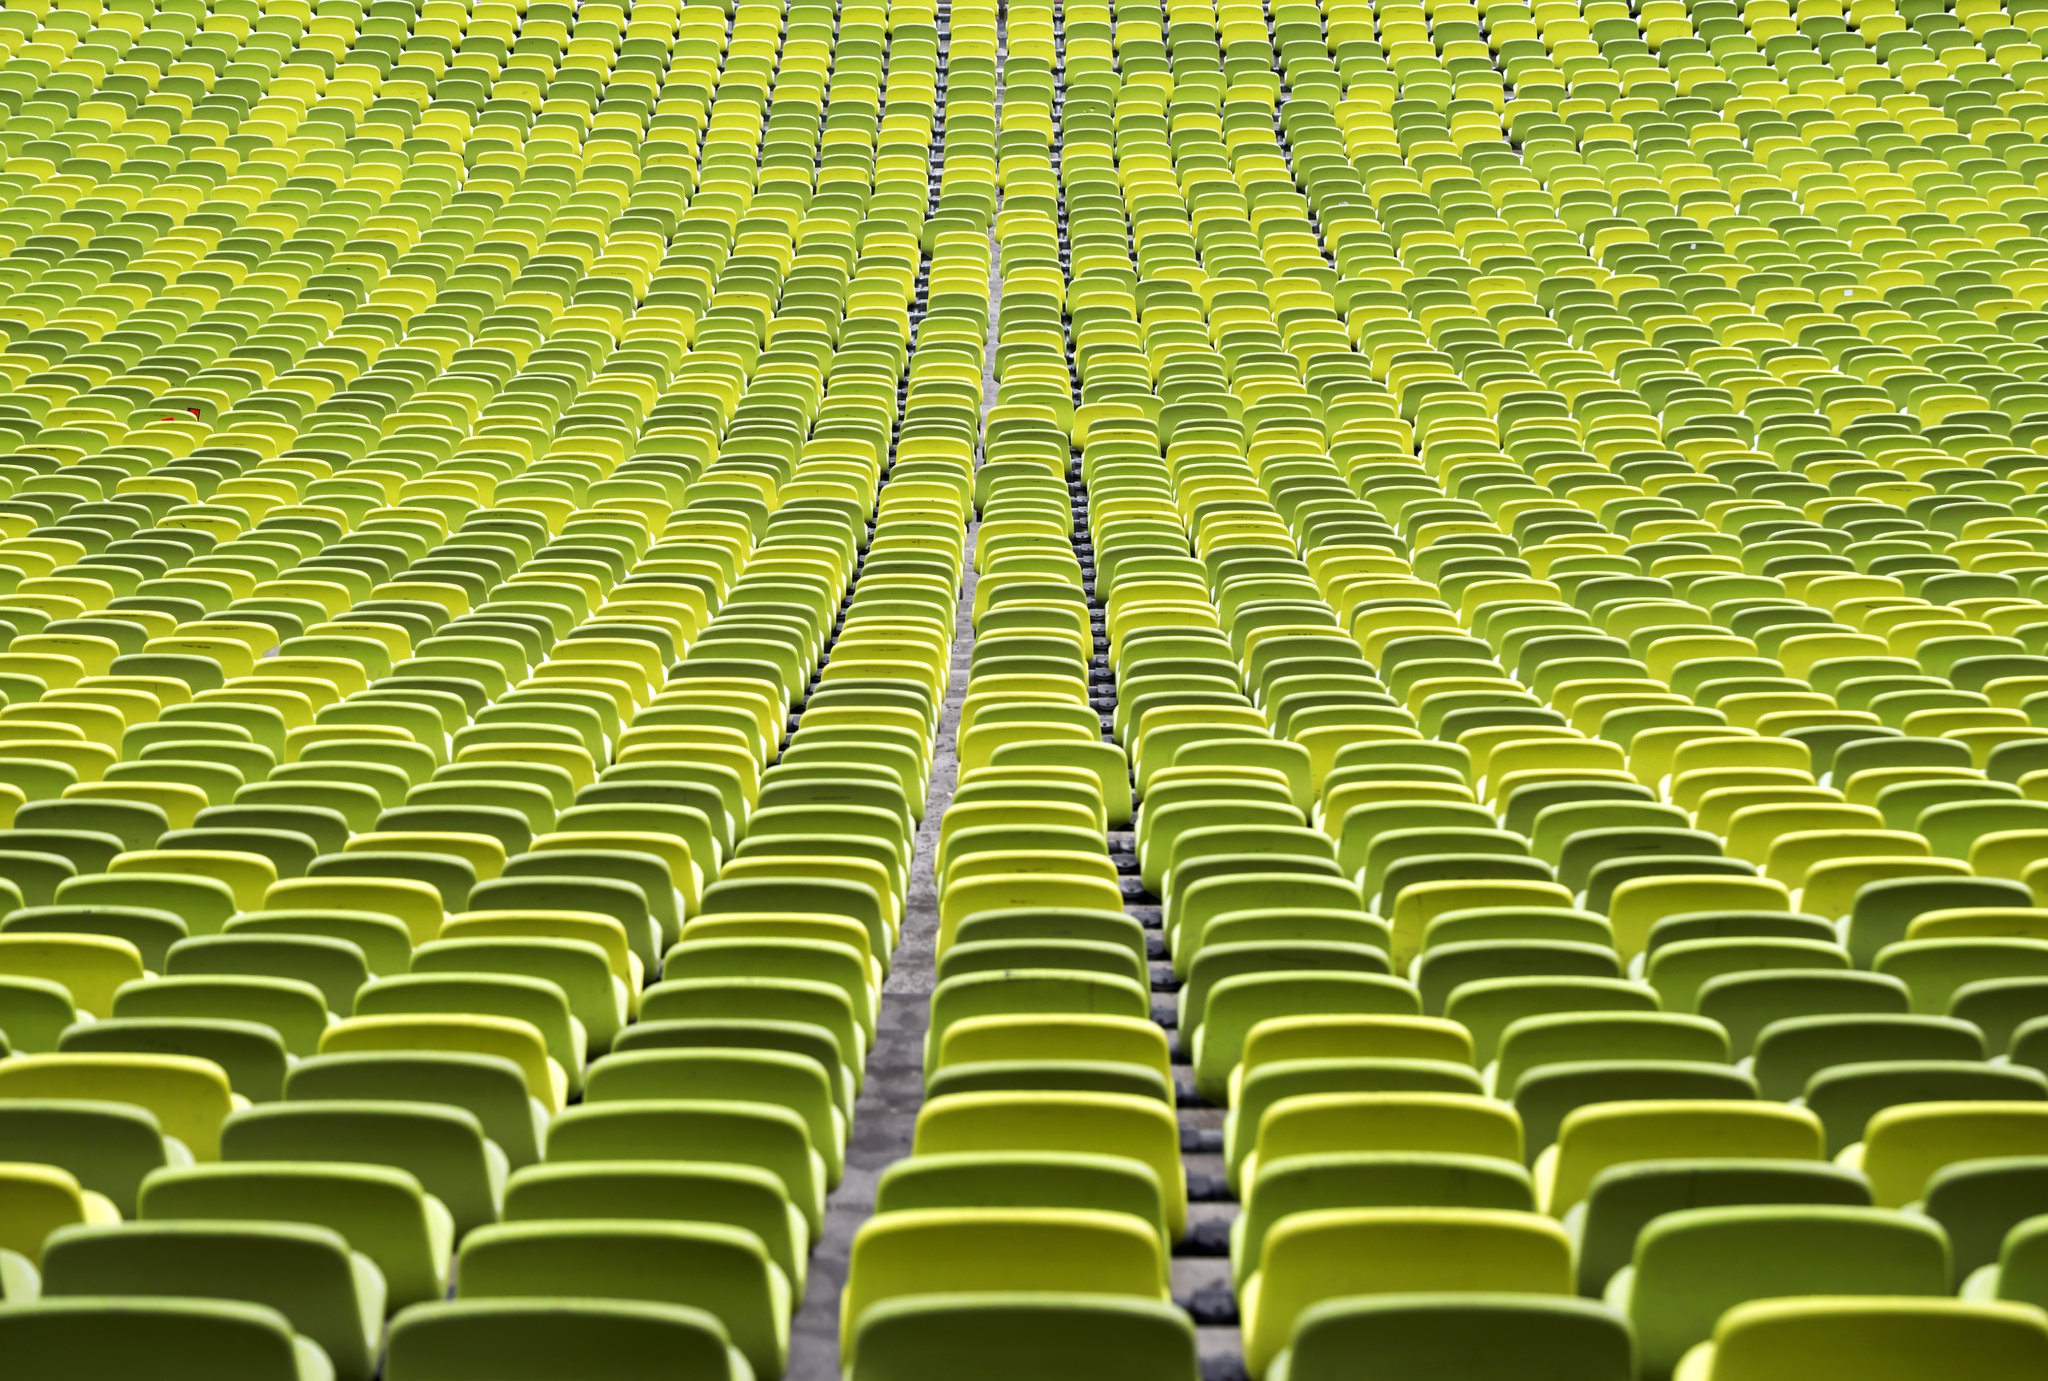 General 2048x1381 green chair stadium